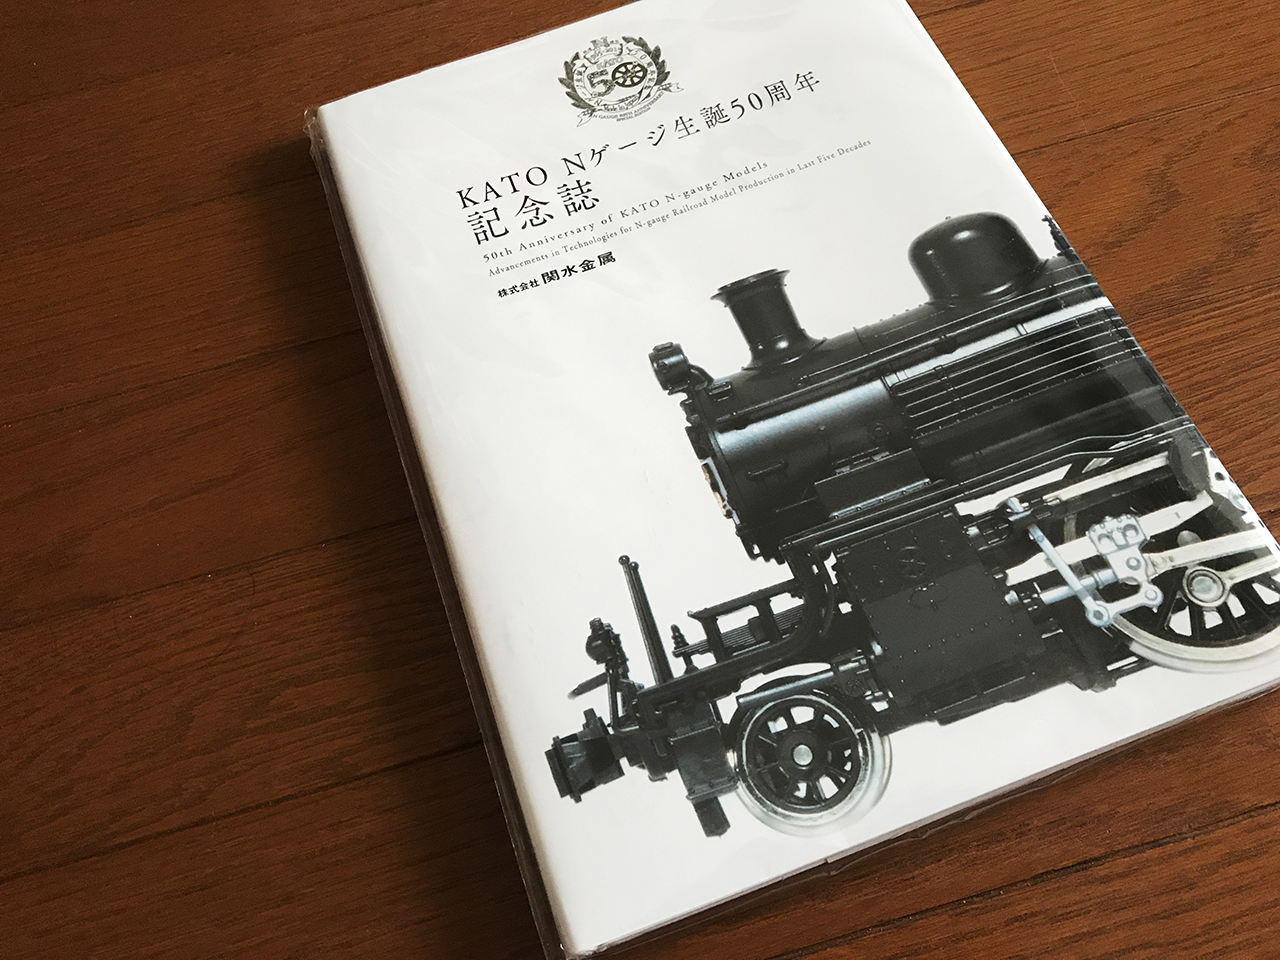 書籍】KATO Nゲージ生誕50周年記念誌 - 鉄道模型部